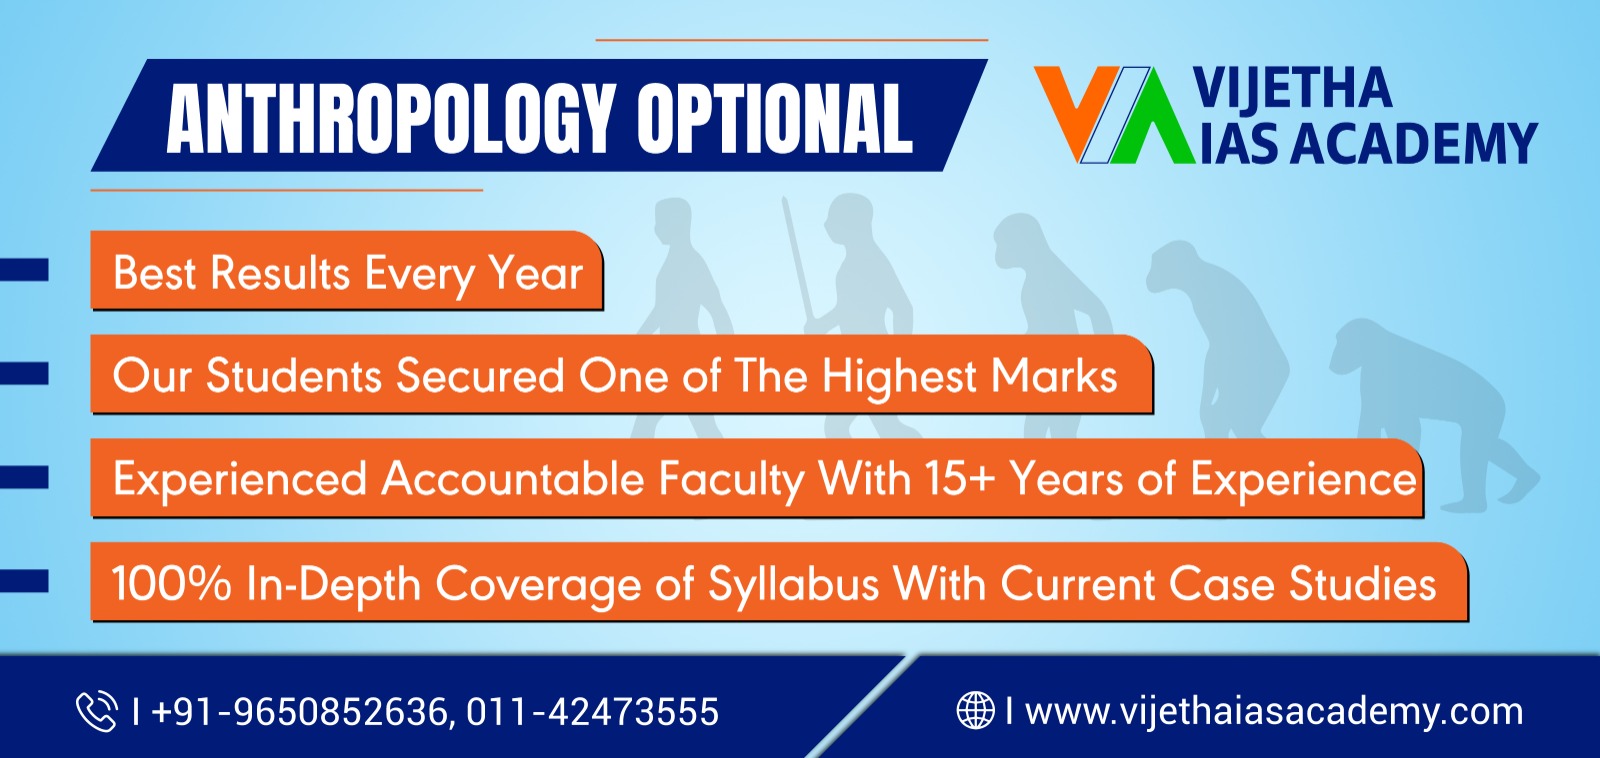 how is vijetha ias for anthropology optional | Best Anthropology Optional Coaching in India | Vijetha IAS Academy